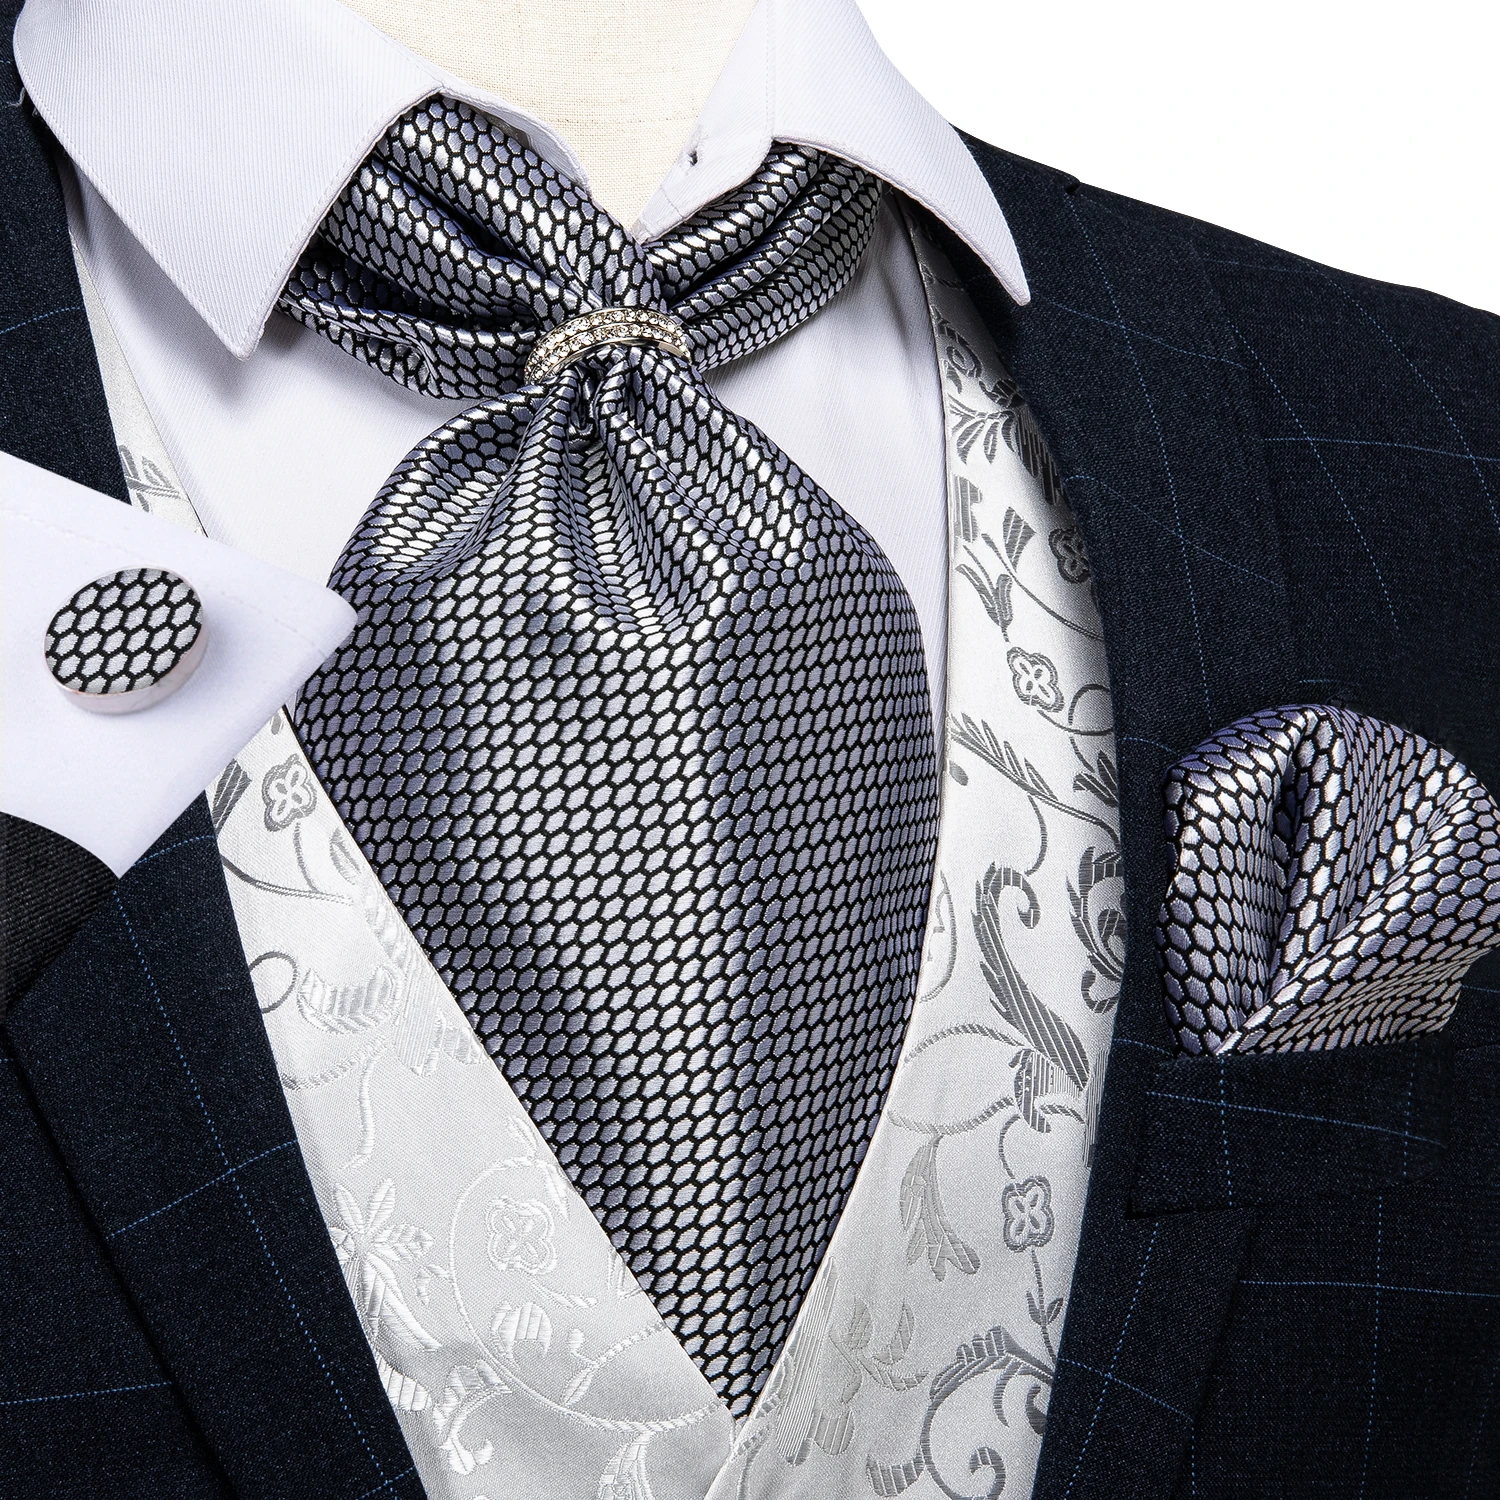 Wedding Cravat with Free Cravat Pin Mens Boys Woven Solid Check Wedding Necktie 